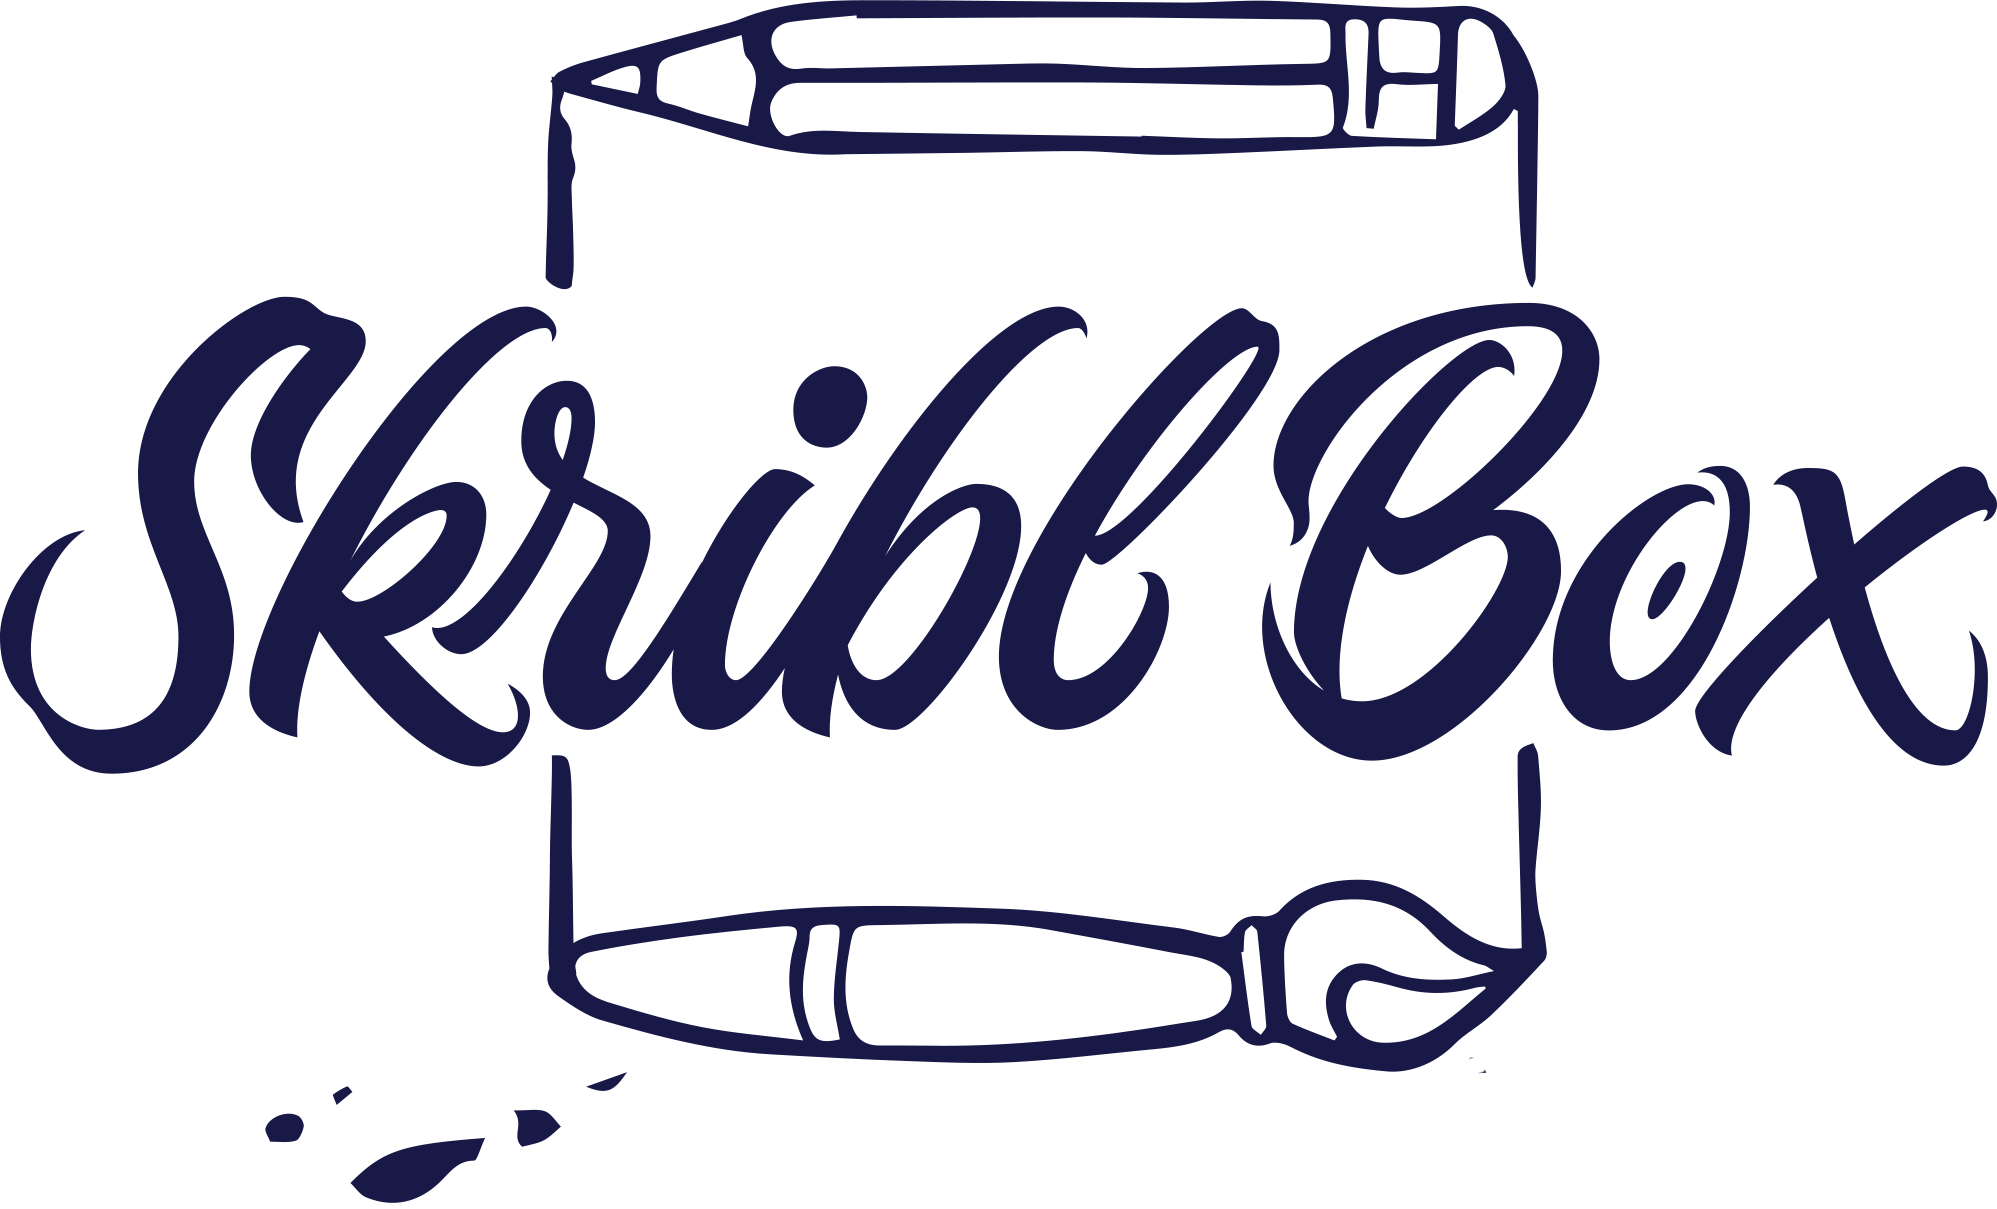 Skribl-logotype-blank